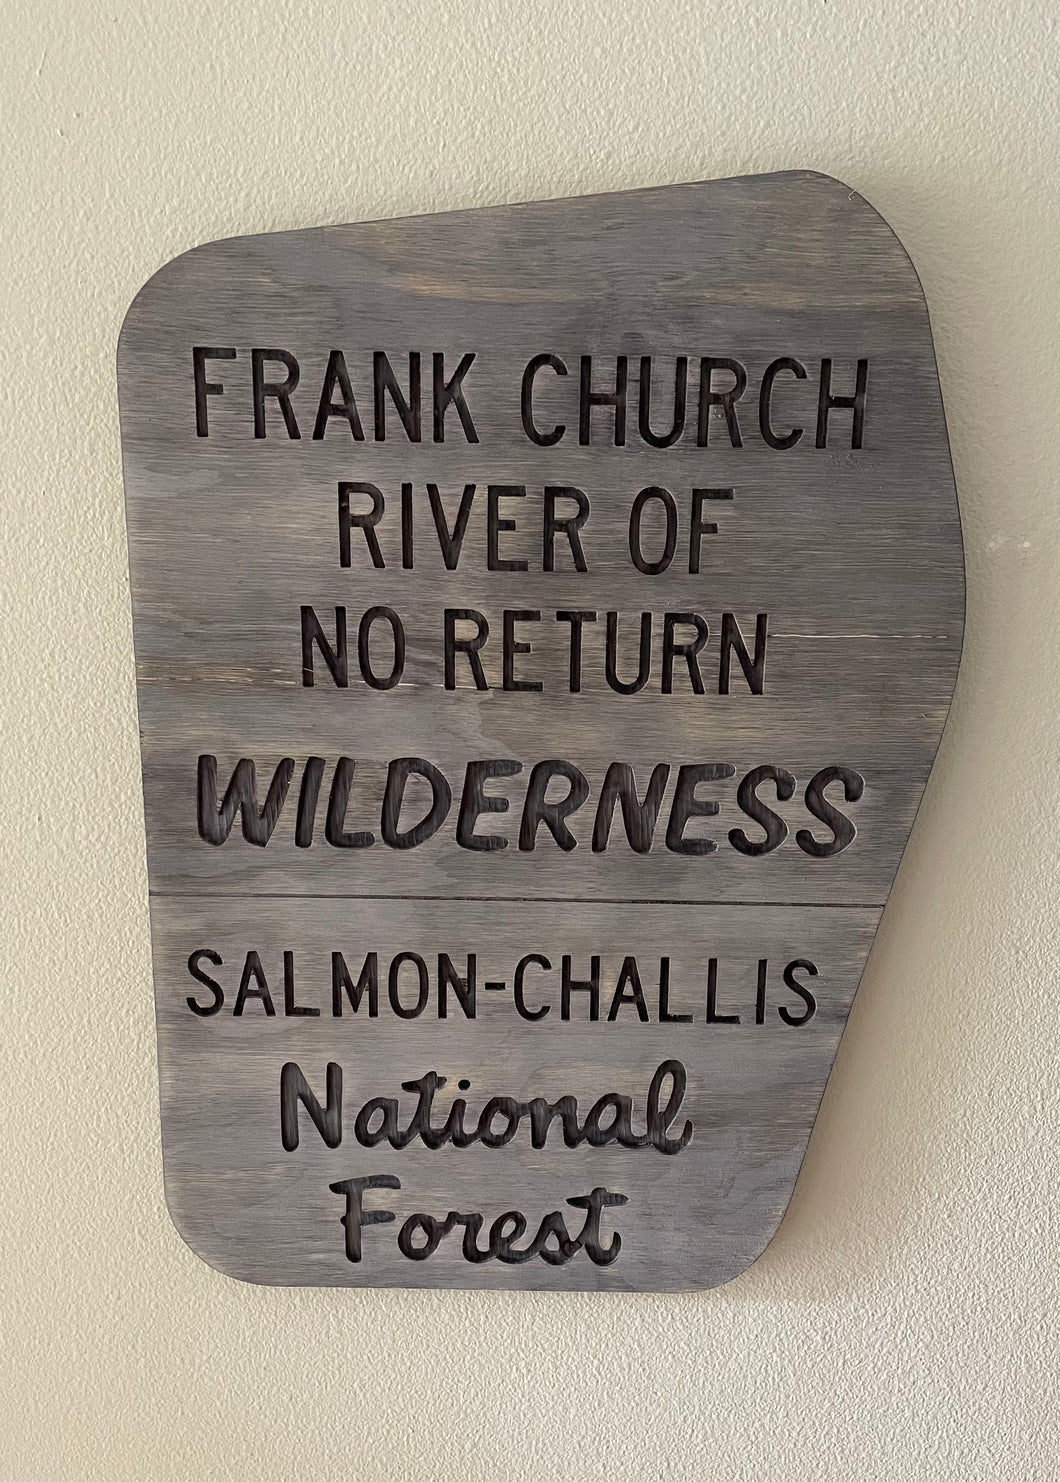 Frank Church wilderness sign